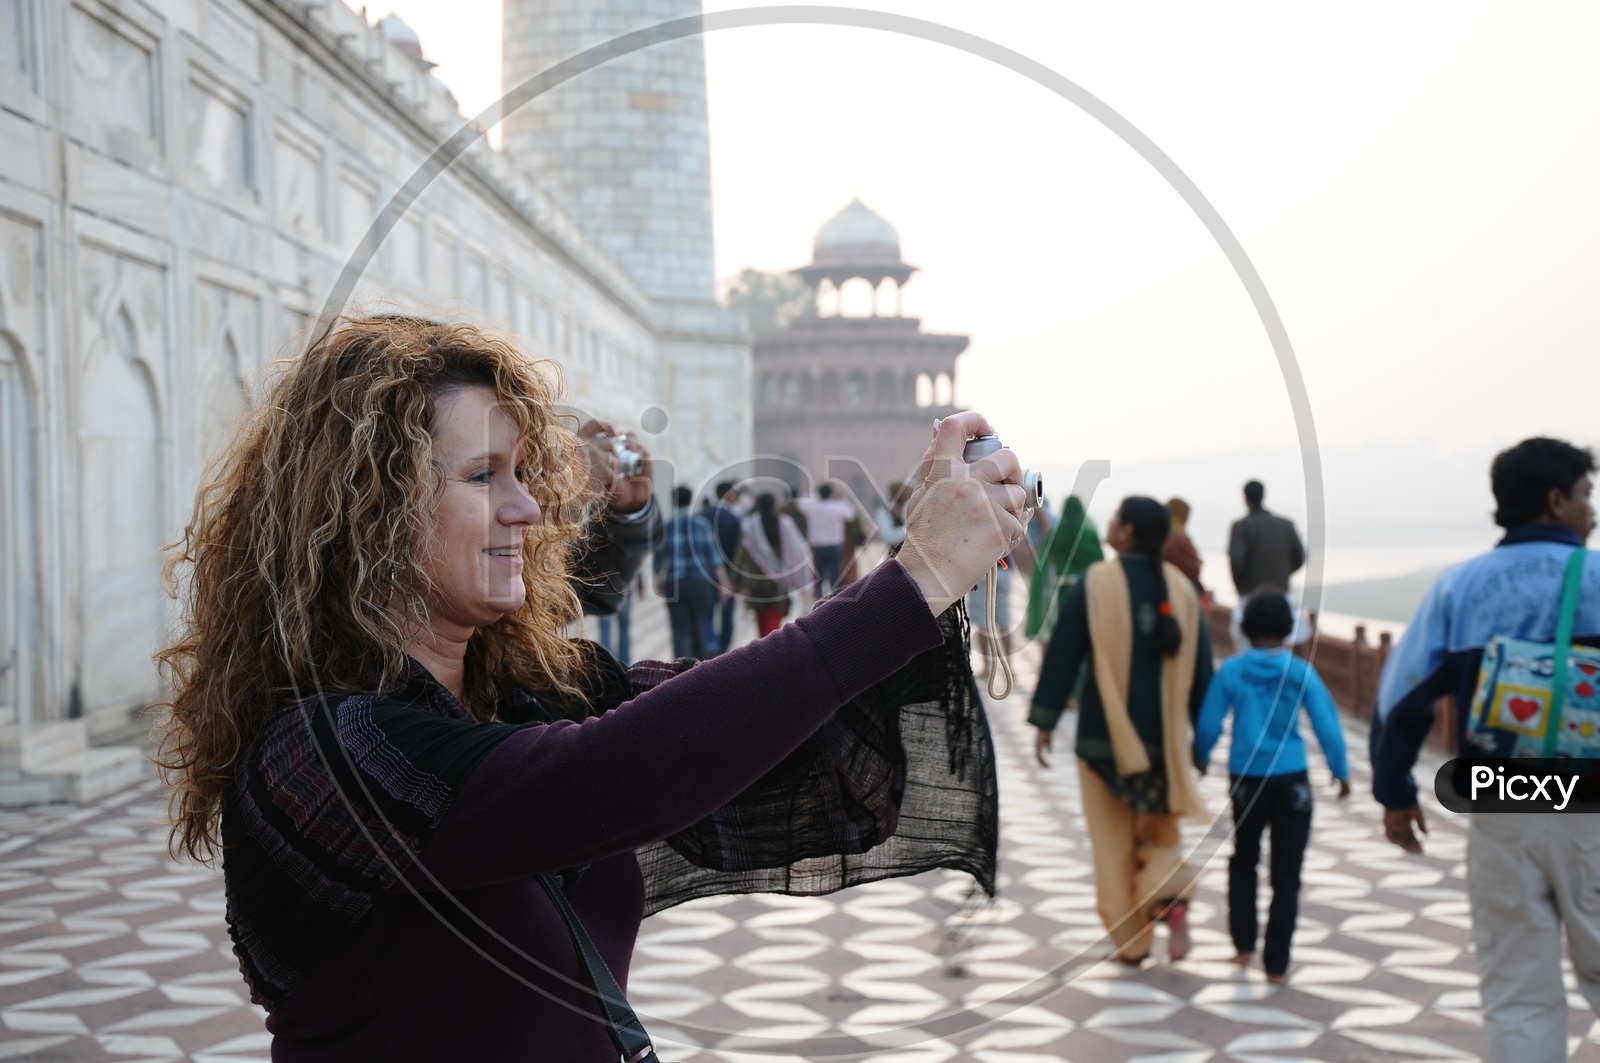 Tourists Taking Pictures At Taj Mahal